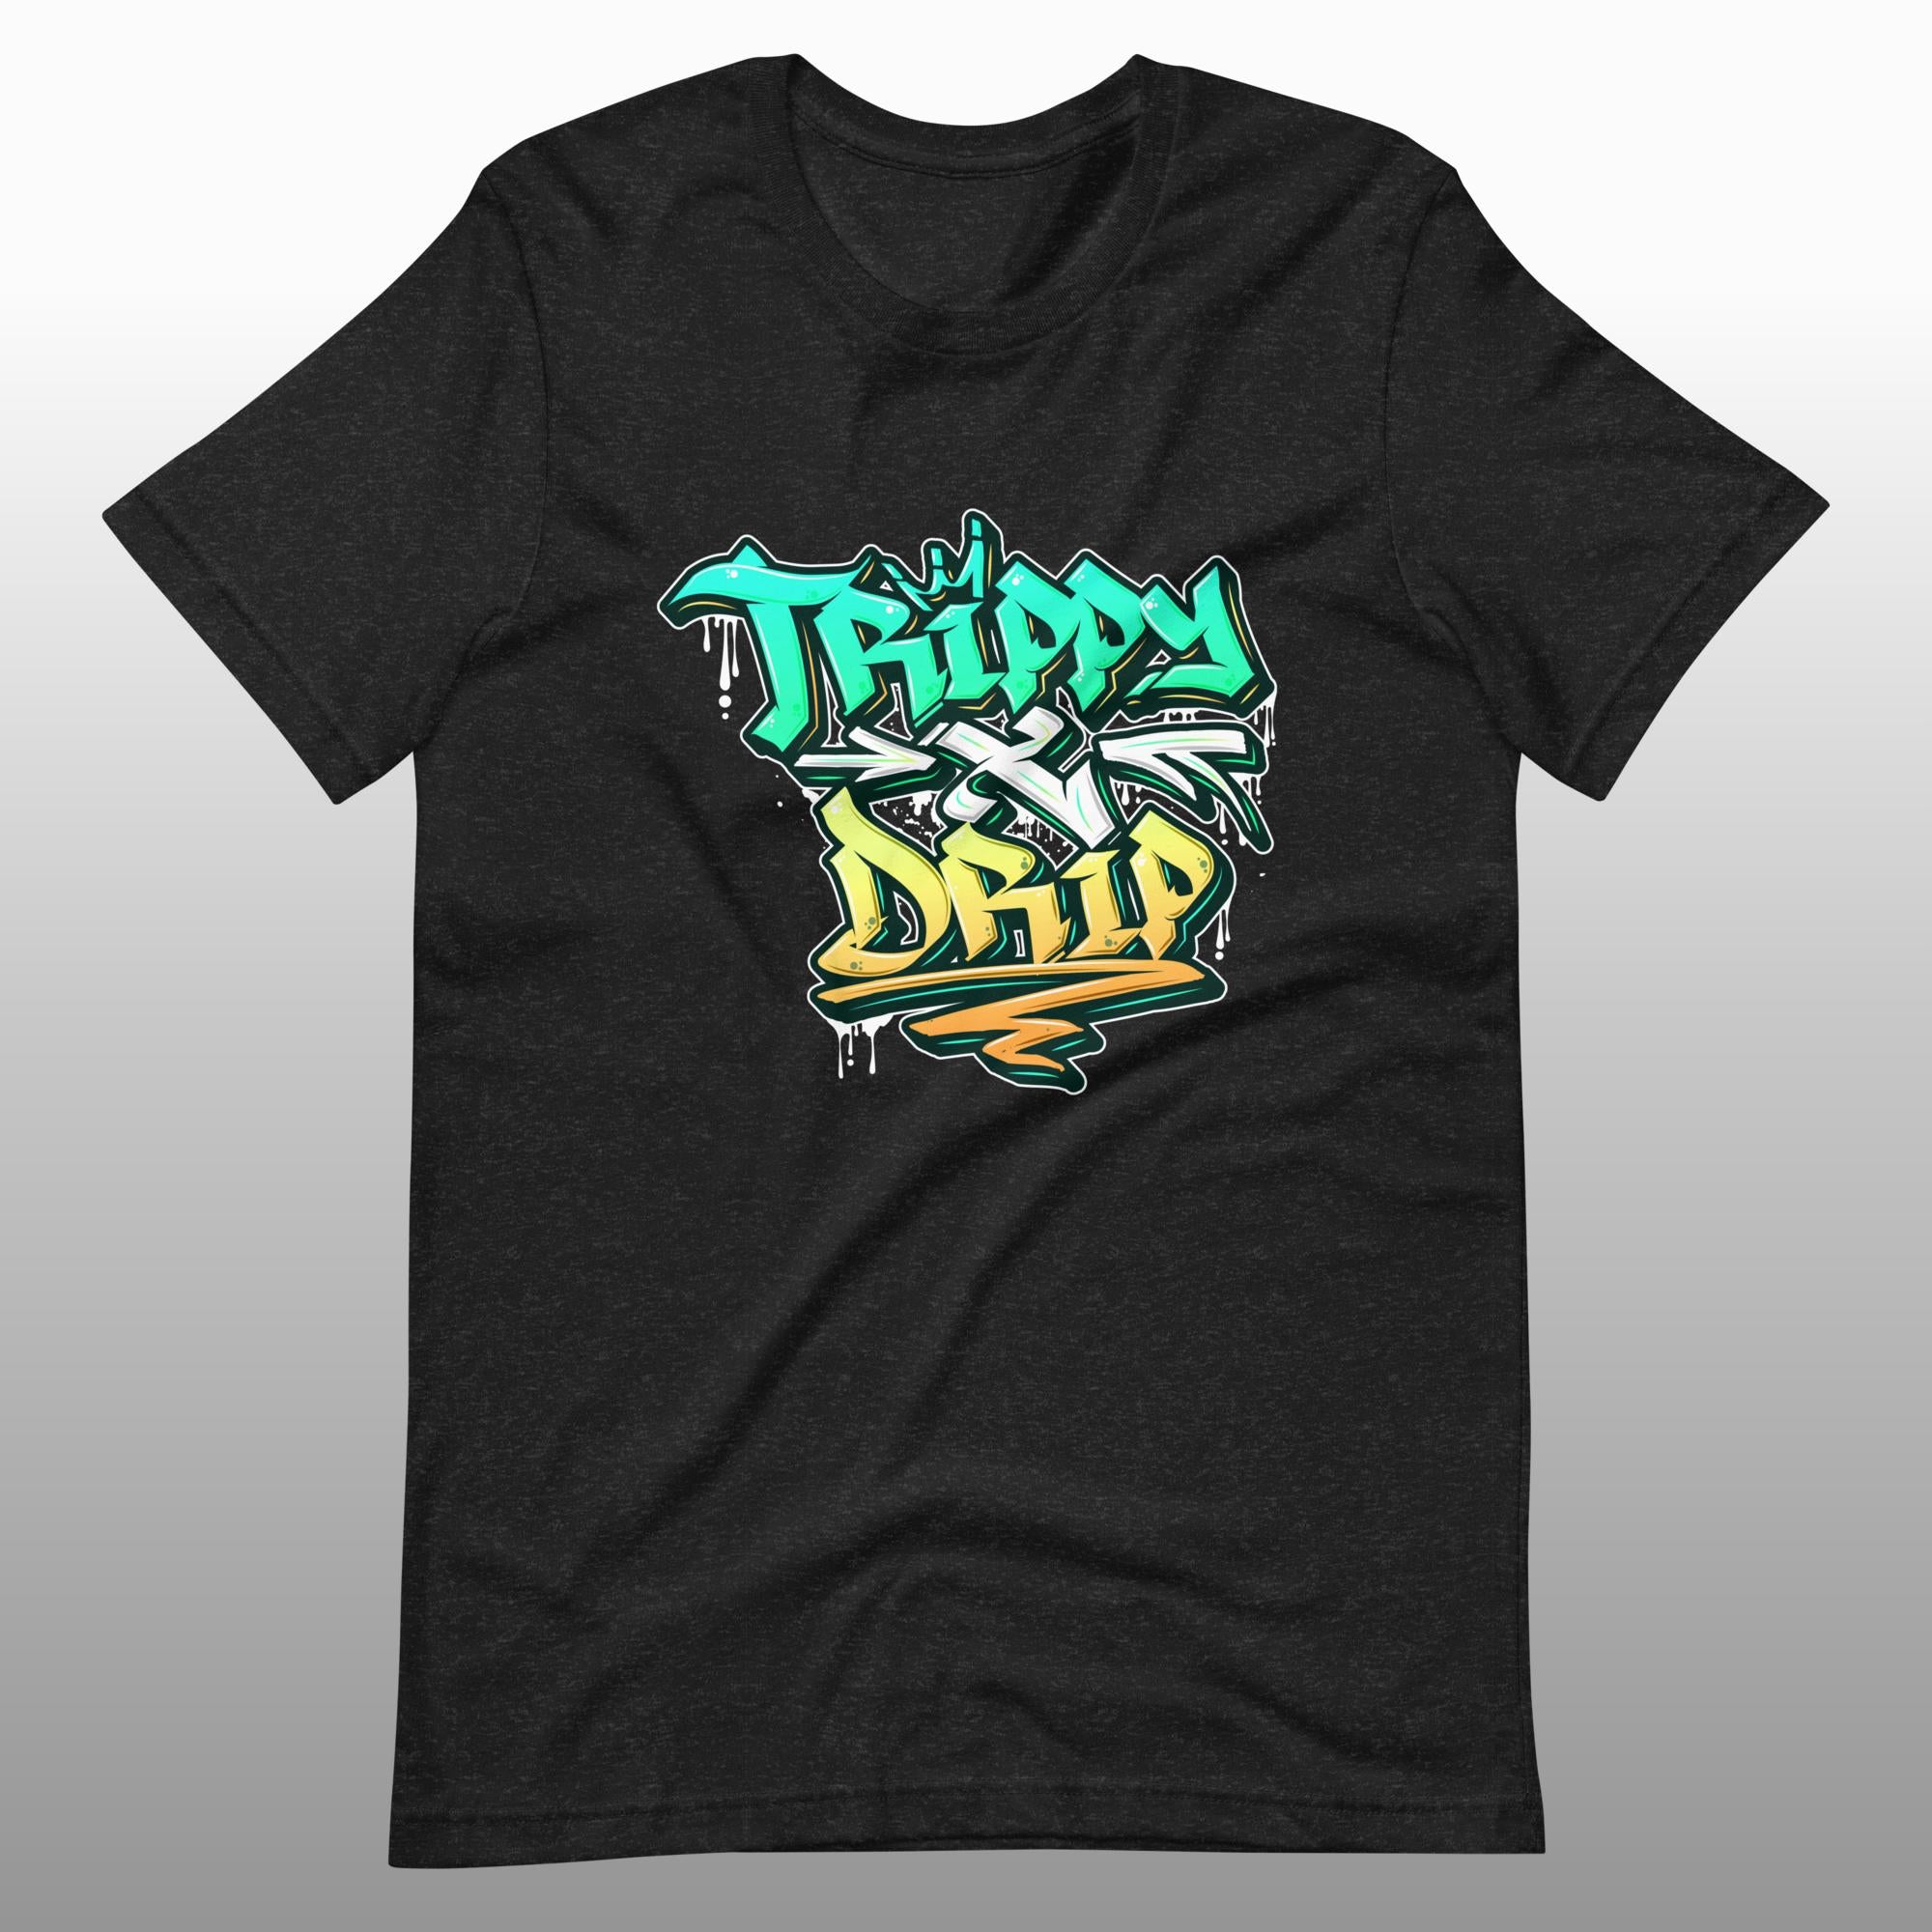 TrippyXDrip Brand - Unisex t-shirt